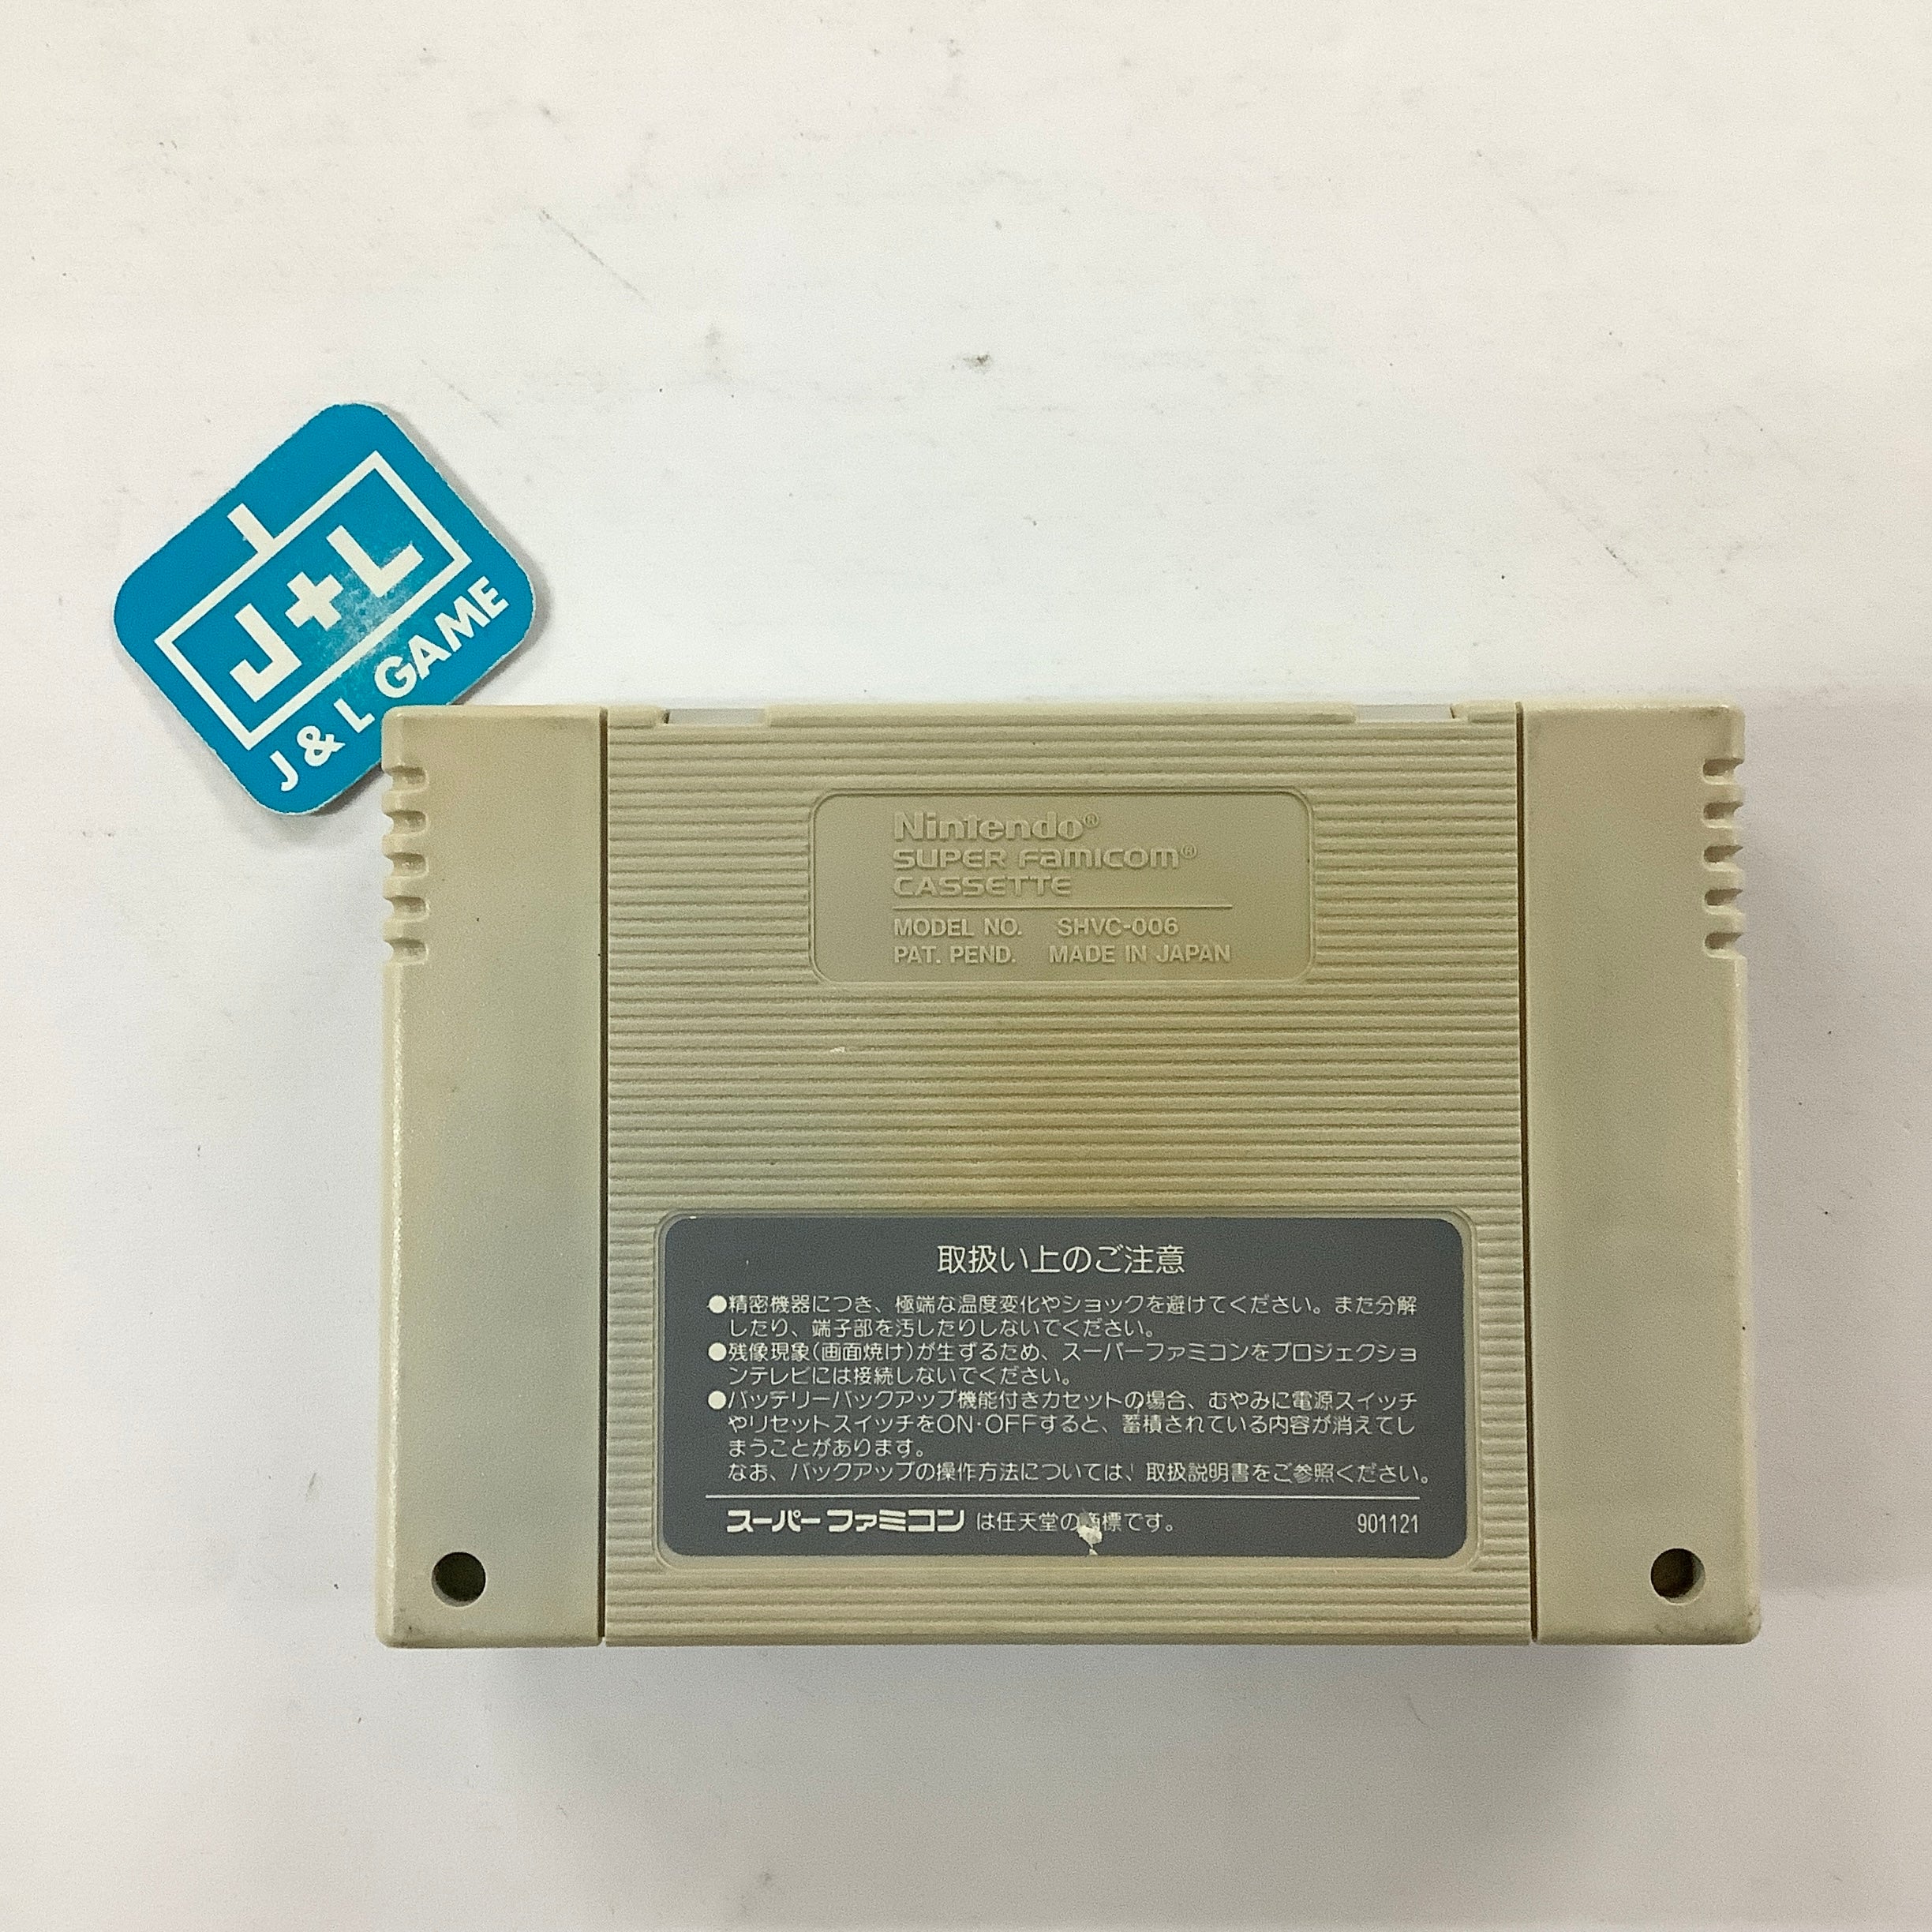 Super Ultra Baseball - (SFC) Super Famicom [Pre-Owned] (Japanese Import) Video Games Culture Brain   